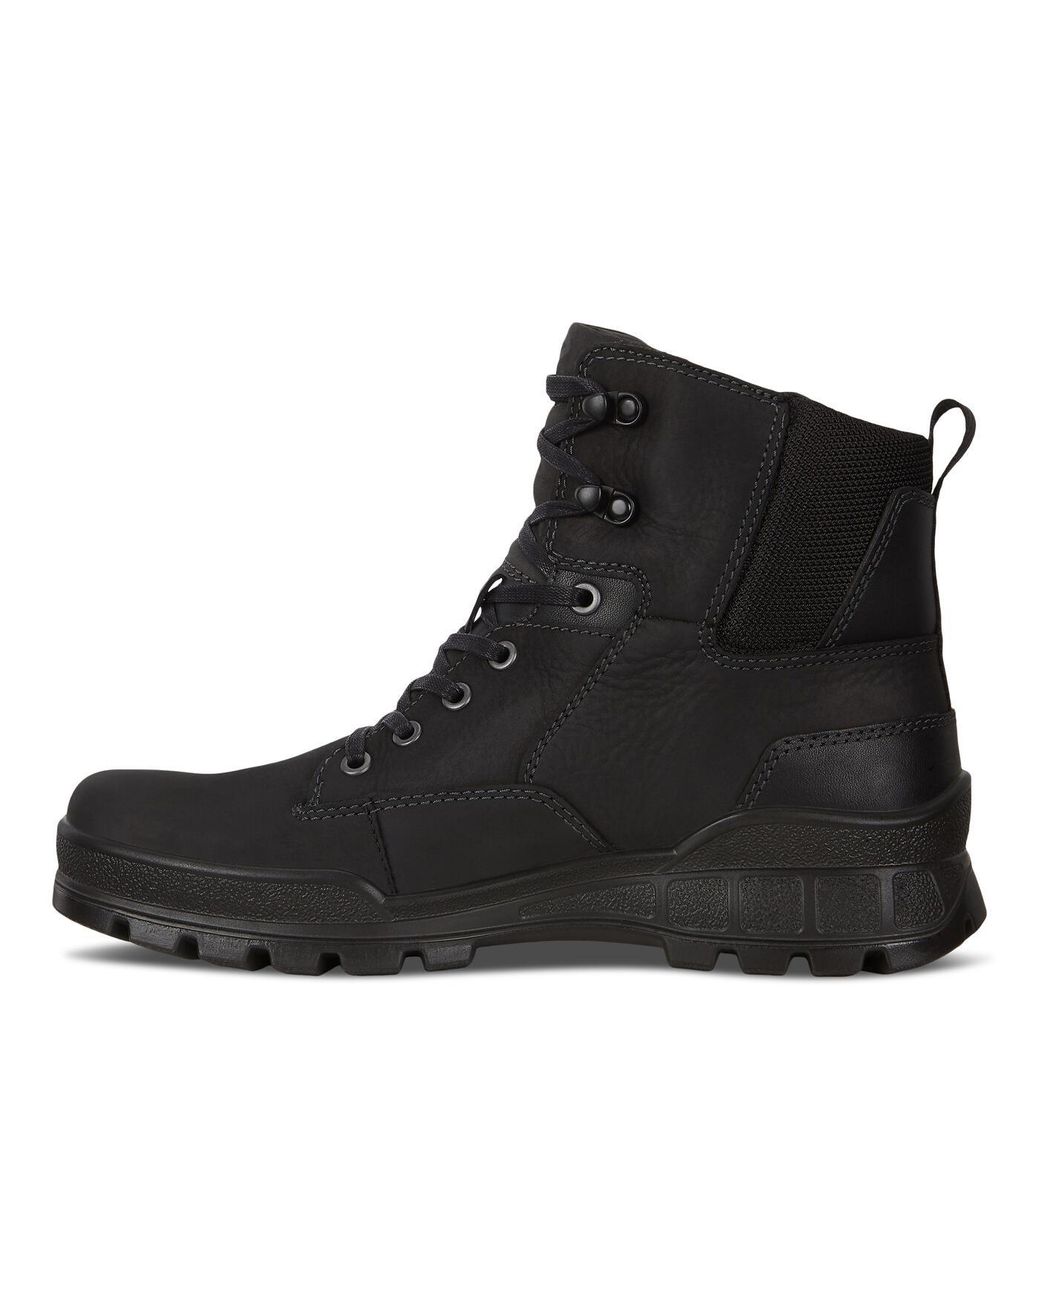 Ecco Rubber Track 25 Mid Hm Pl Boots Size 5 Black for Men - Lyst